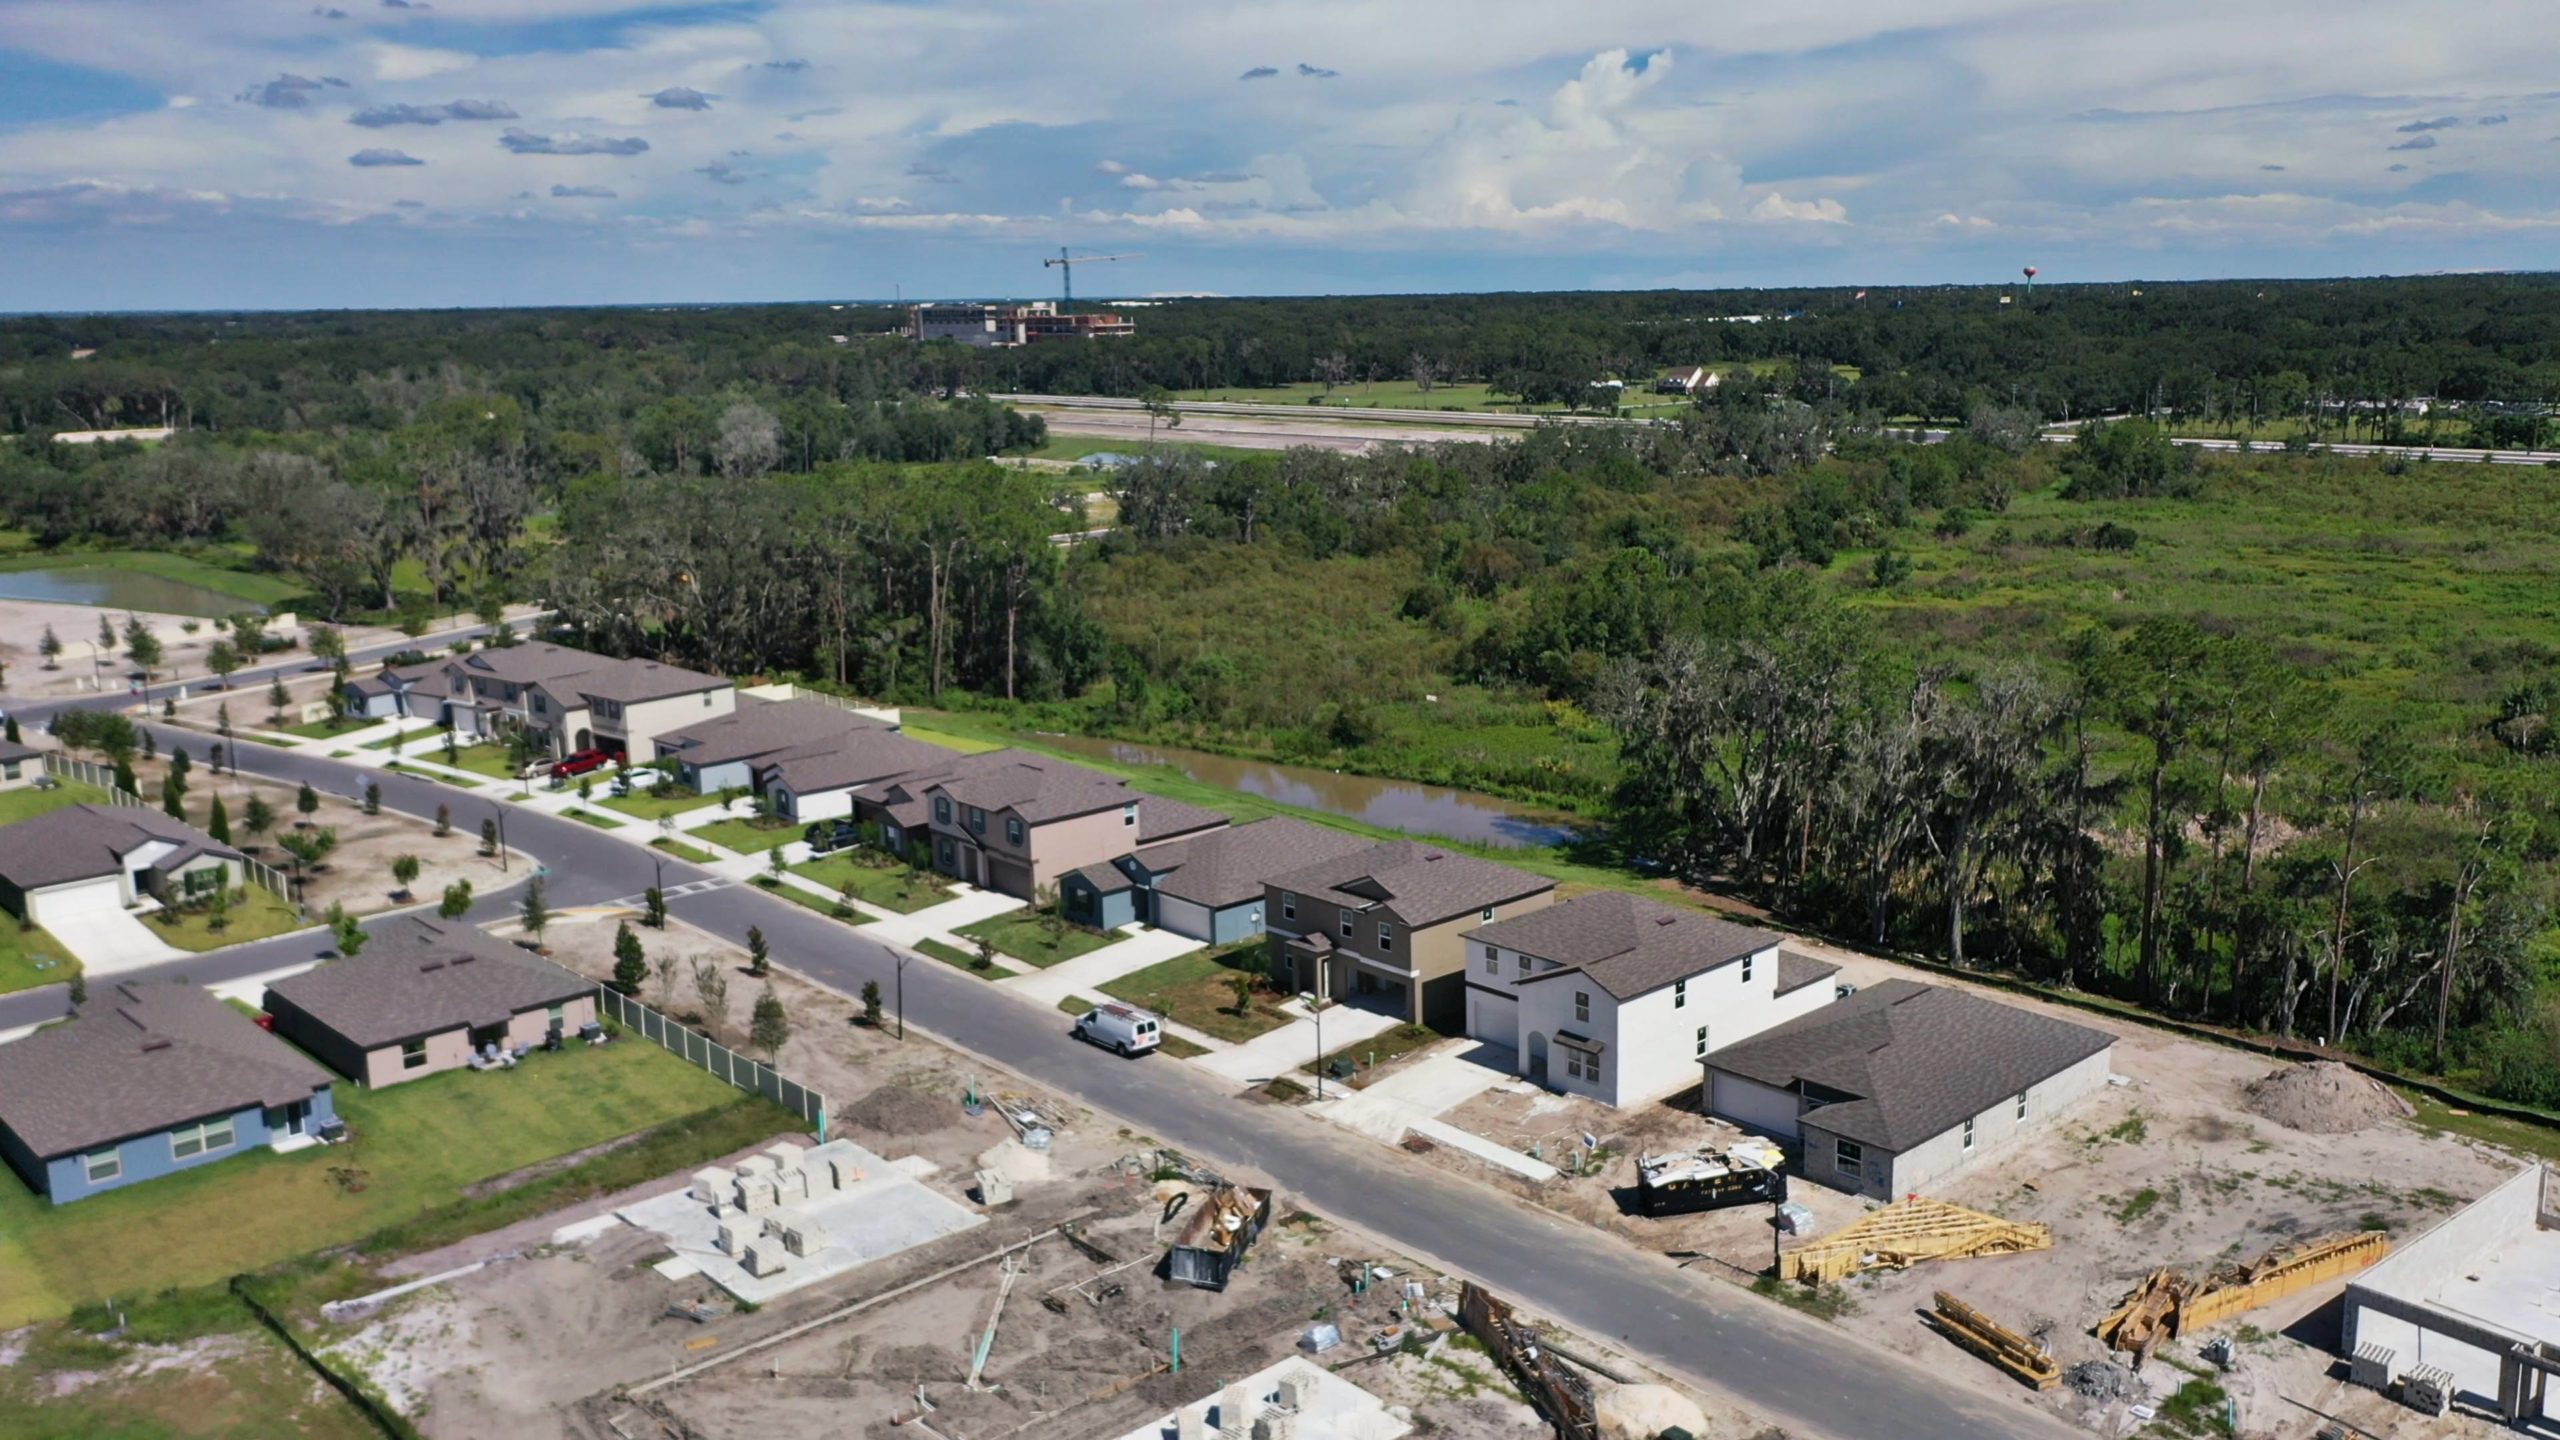 North Park Isle - Plant City FL Neighborhood Construction